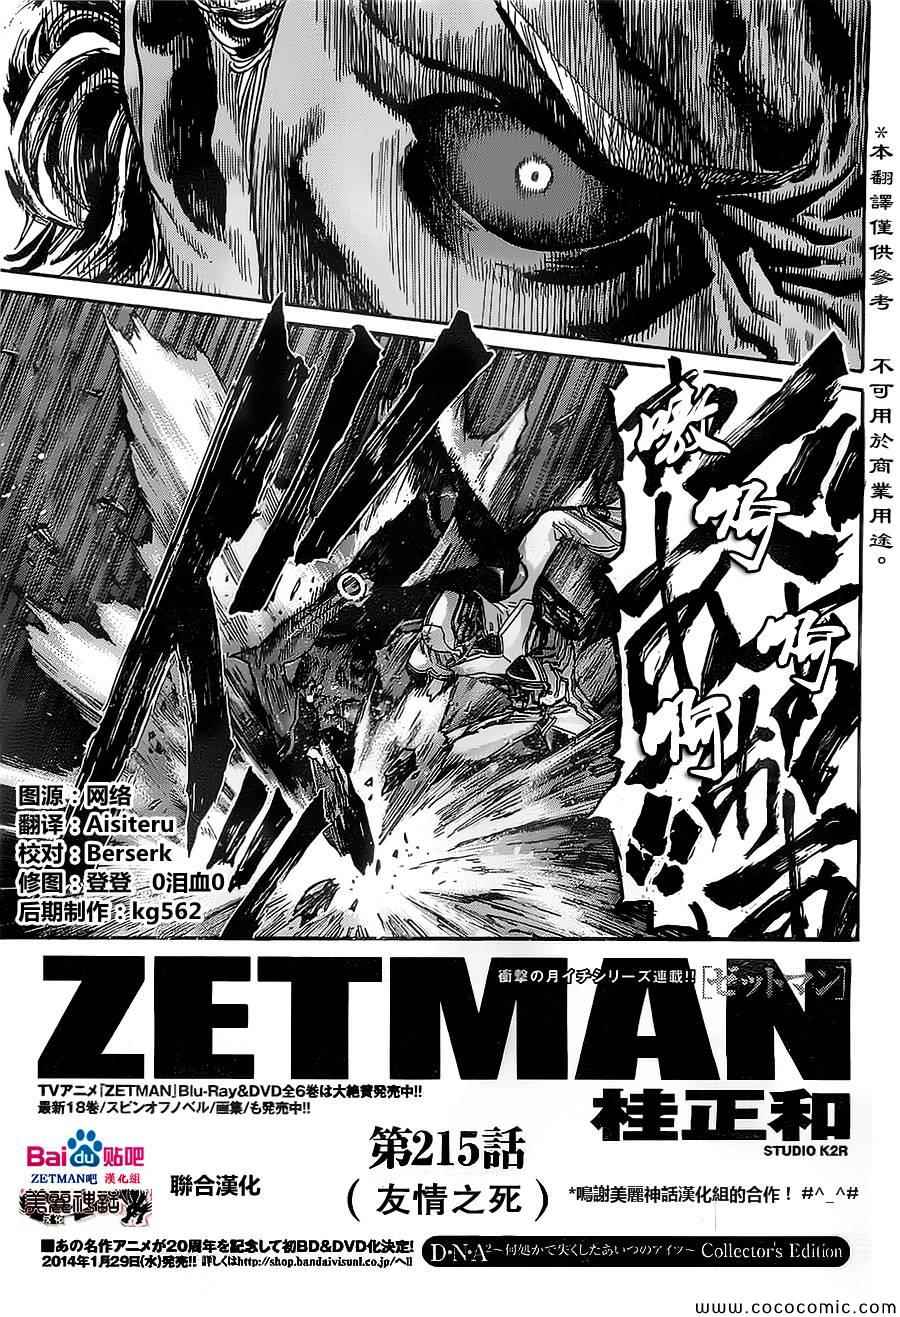 《ZETMAN超魔人》漫画 zetman215集